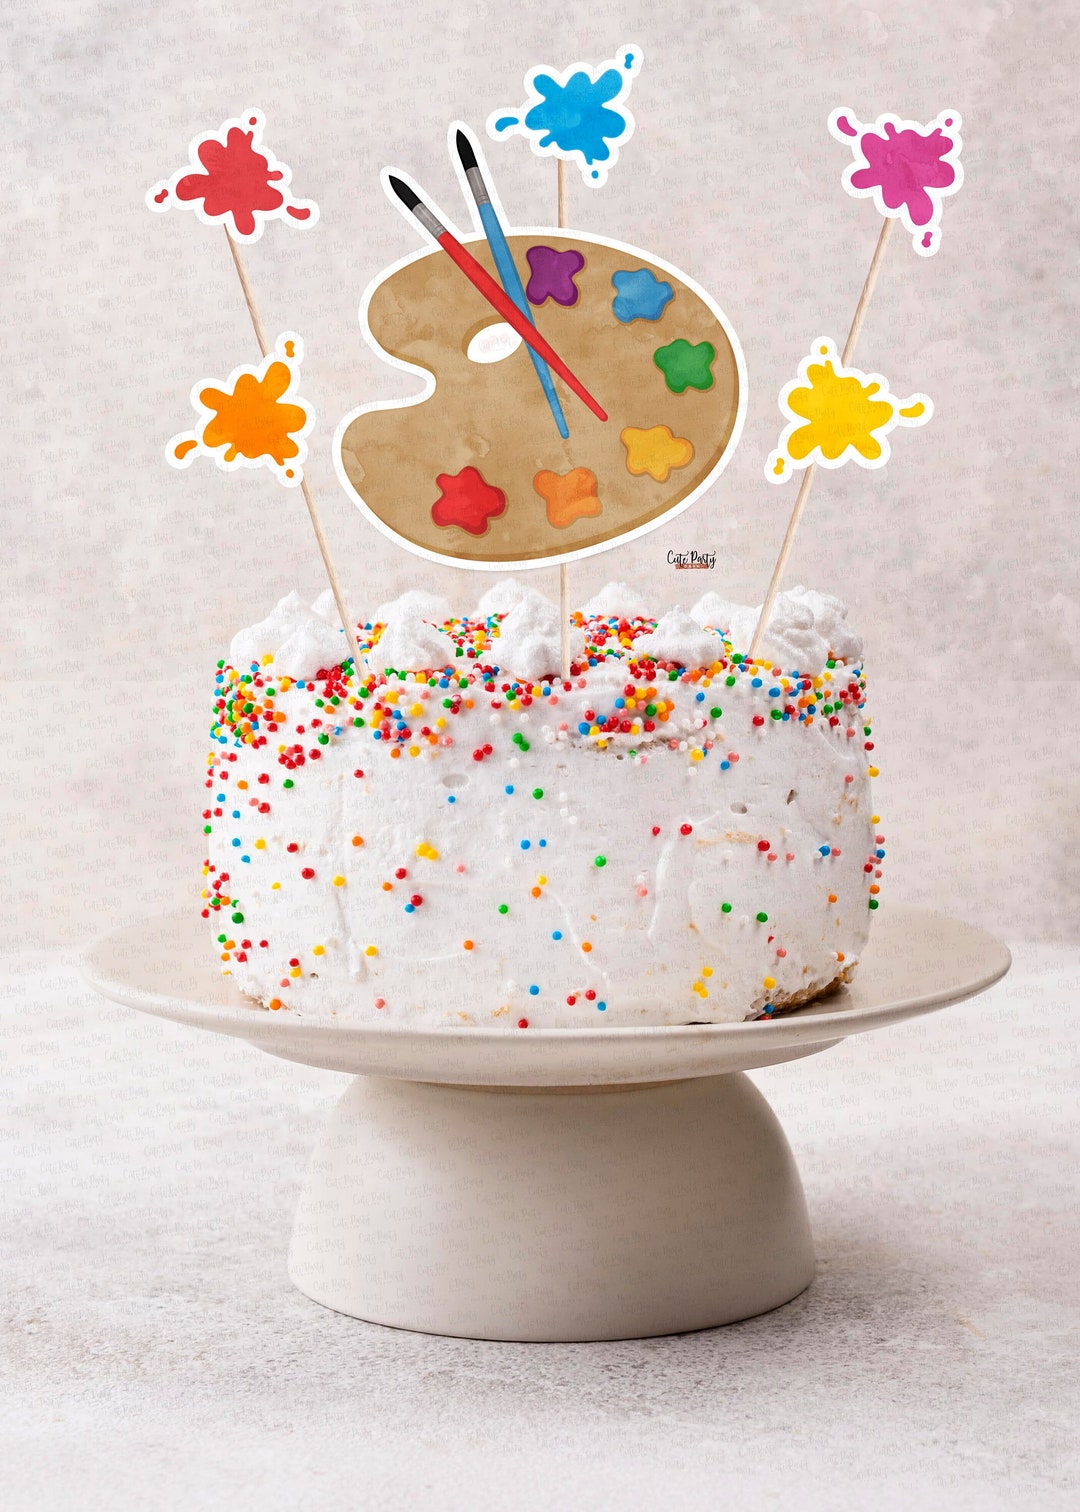 CRAYON ASSORTMENT EDIBLE Sugar 12 or 24 Pieces Cupcake or Cake